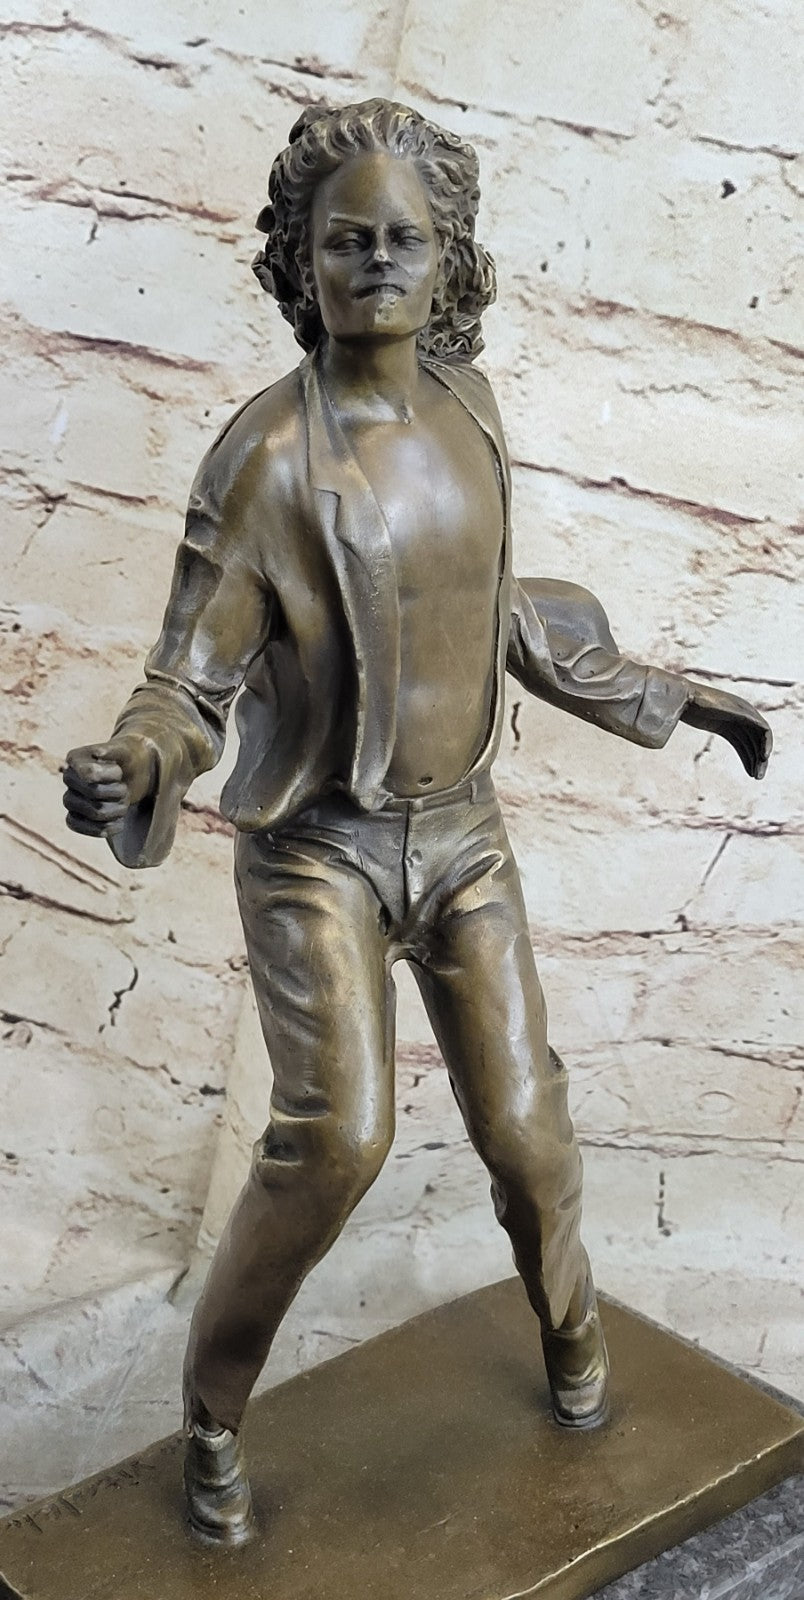 American Icon Michael Jackson Trophy Bronze Singer Memorabilia Sculpture Figure